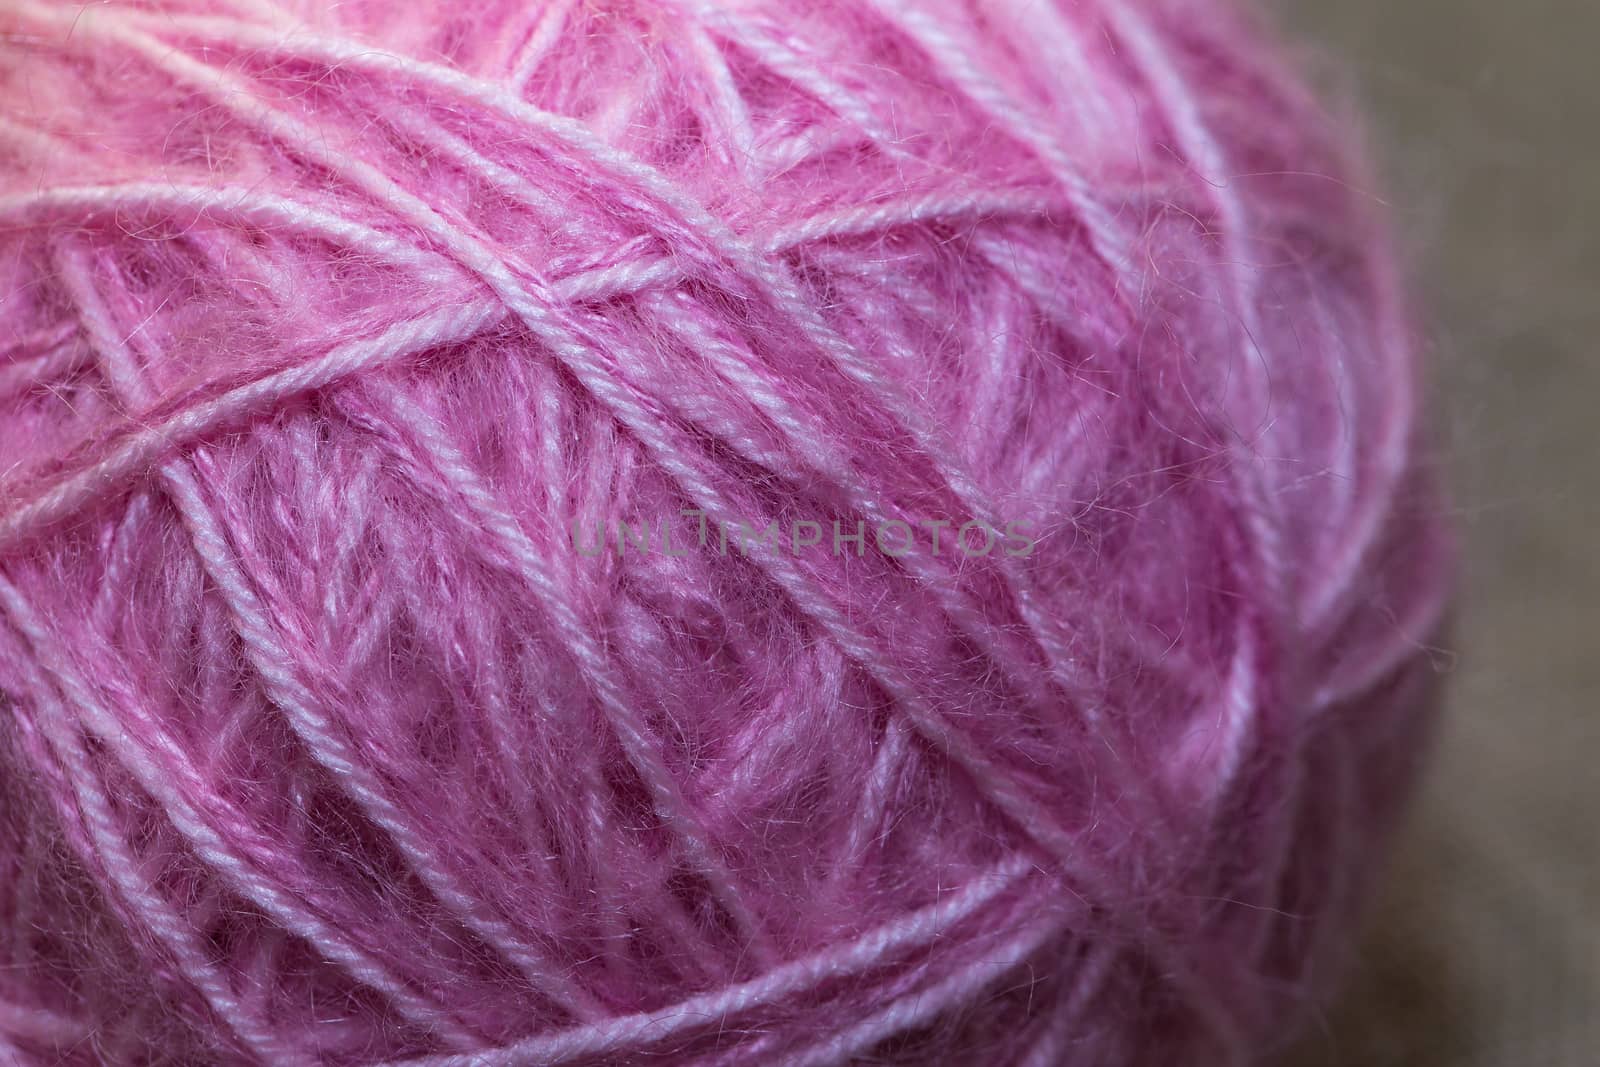 pink ball of yarn closeup. by boys1983@mail.ru